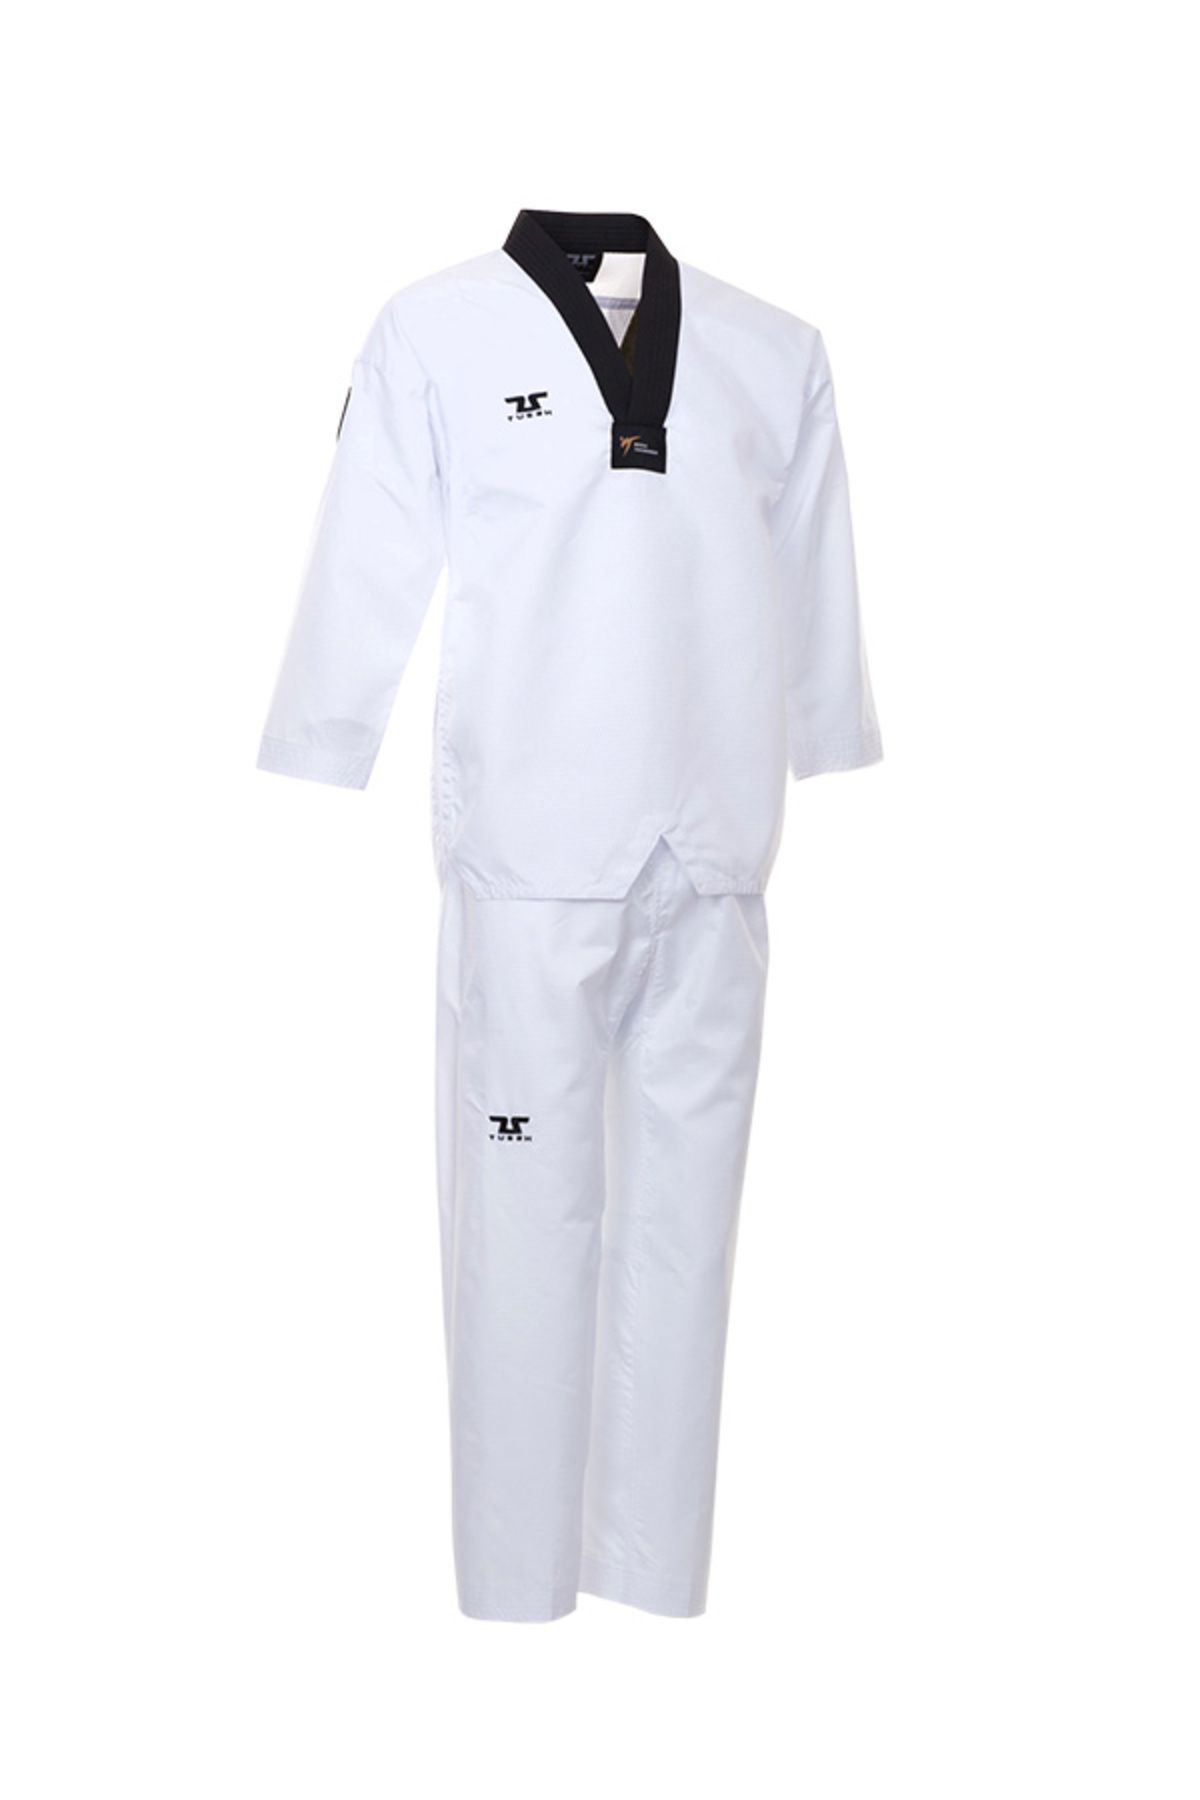 hakuof Tusah WT Onaylı Fighter Fileli Dobok Taekwondo Tekvando Elbisesi Dubok